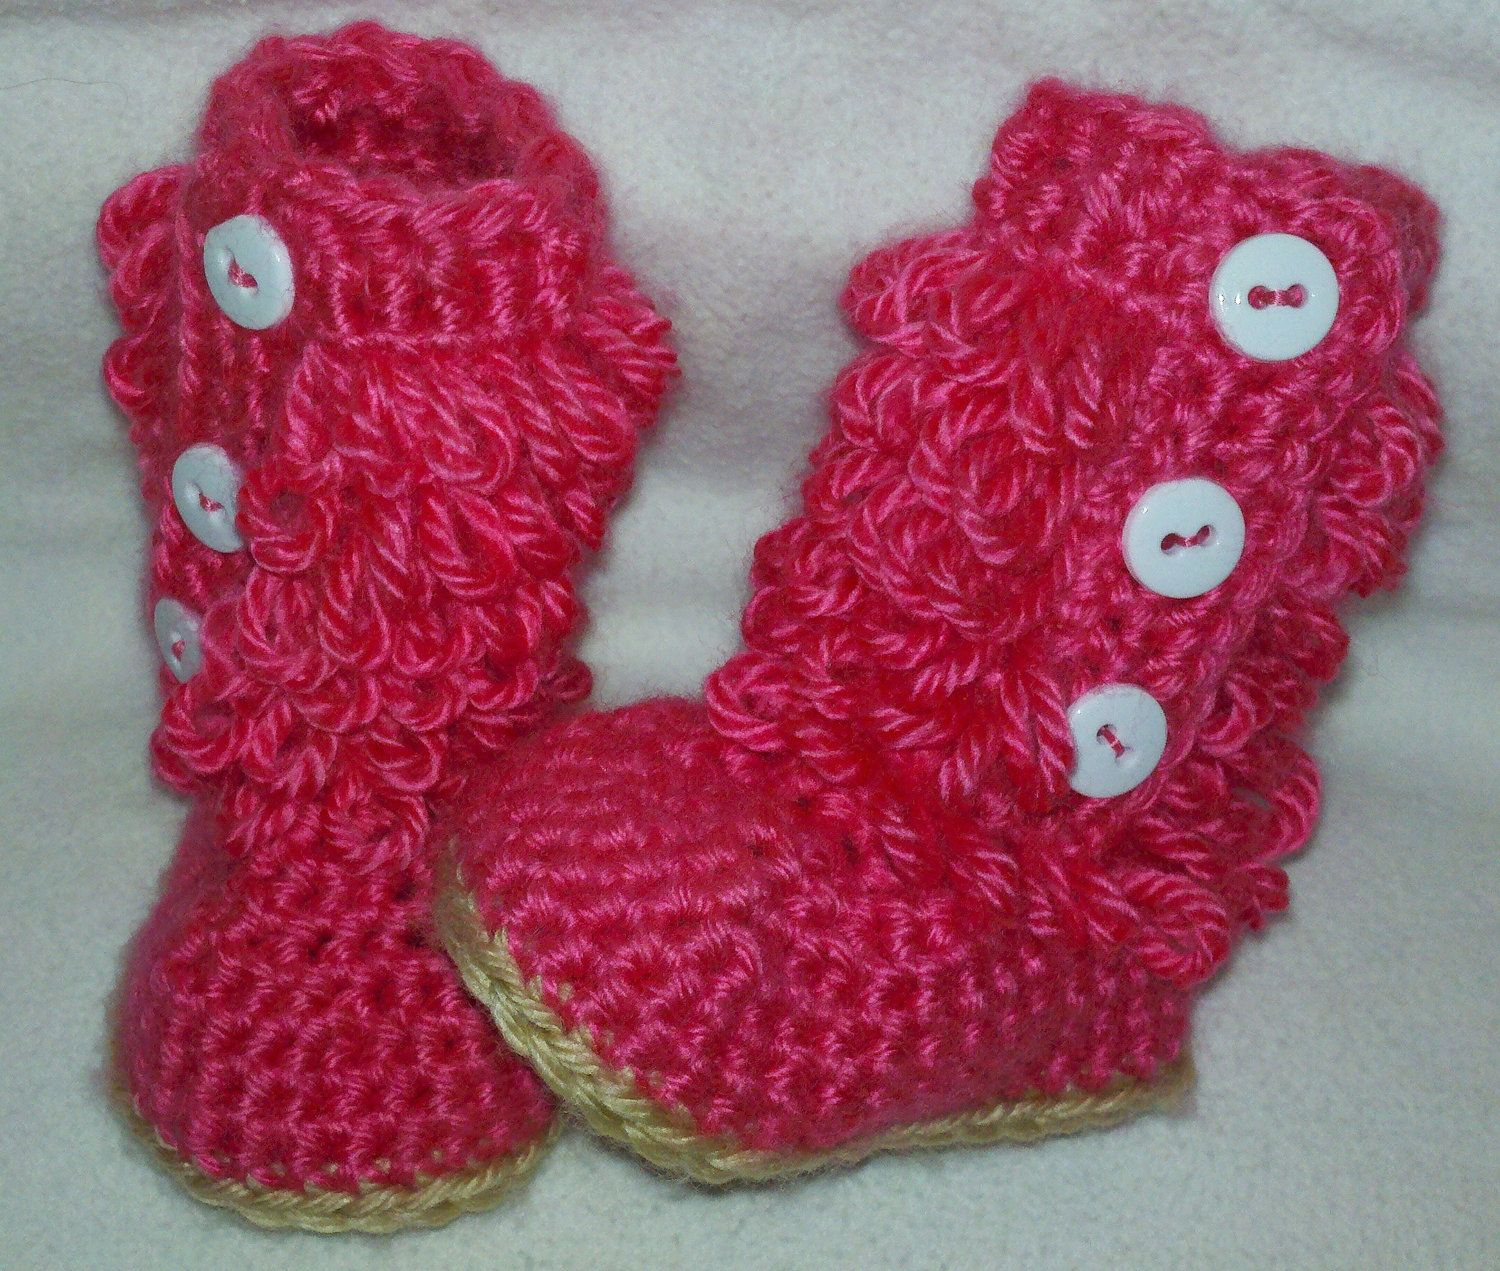 Crochet Pattern Central Crochetpatterncentral Crochet Pattern Central Free Shoe And